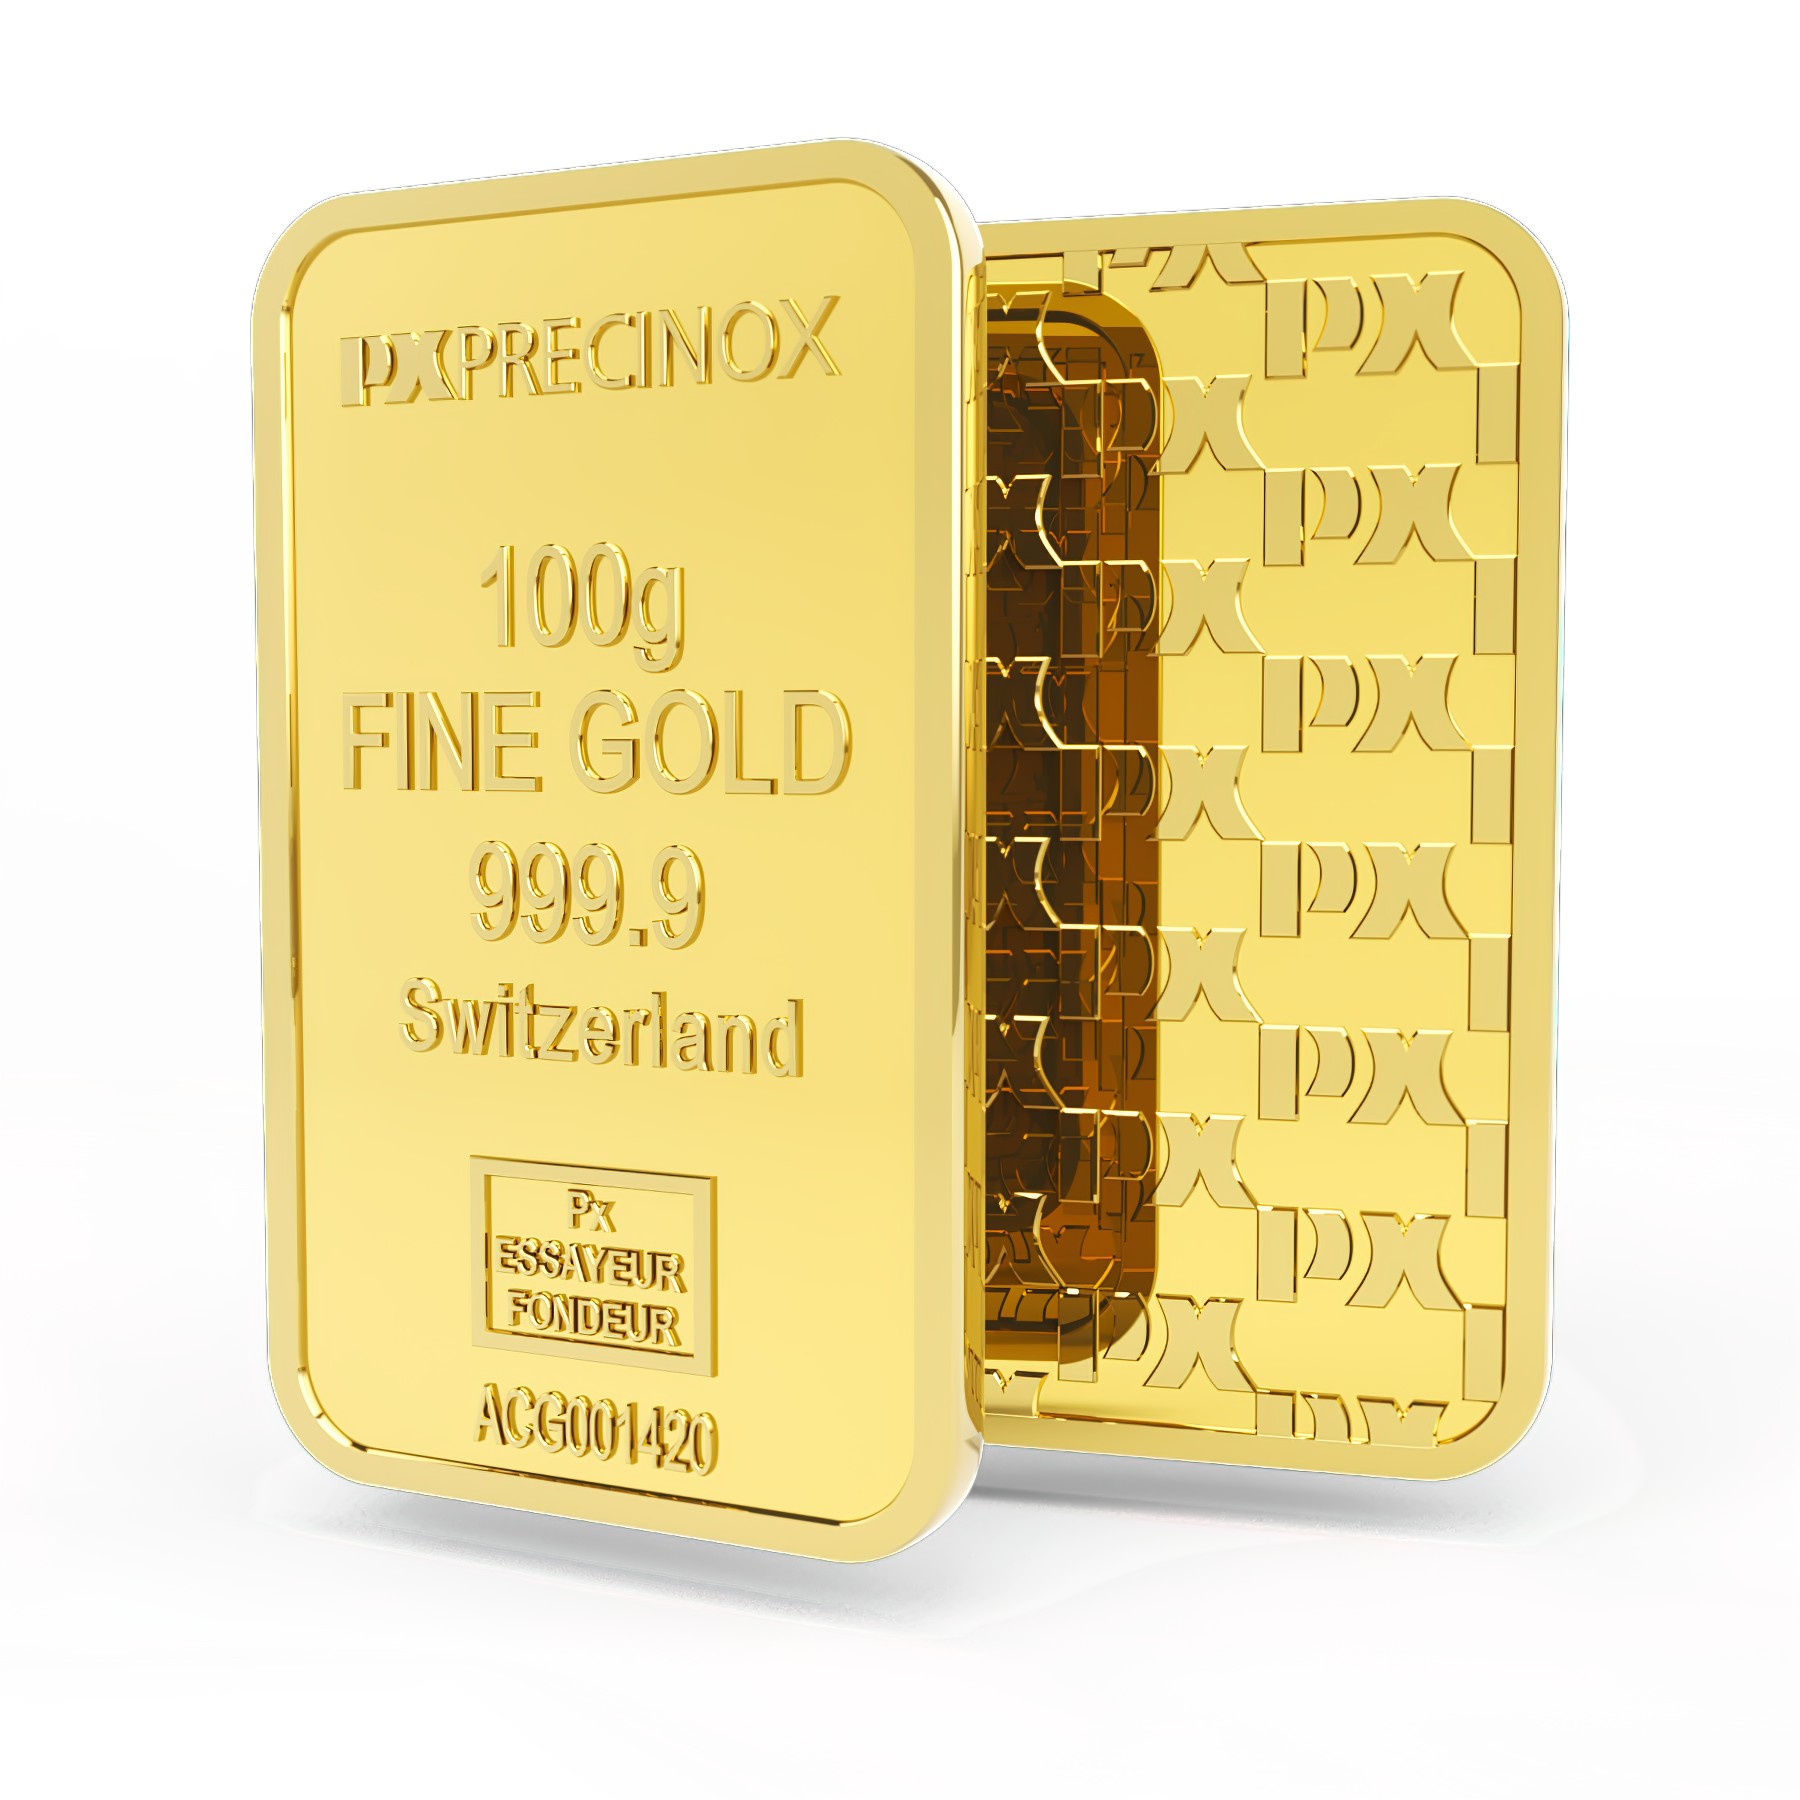 Lingou aur 100g, Elvetia, Fine Gold, 999,9